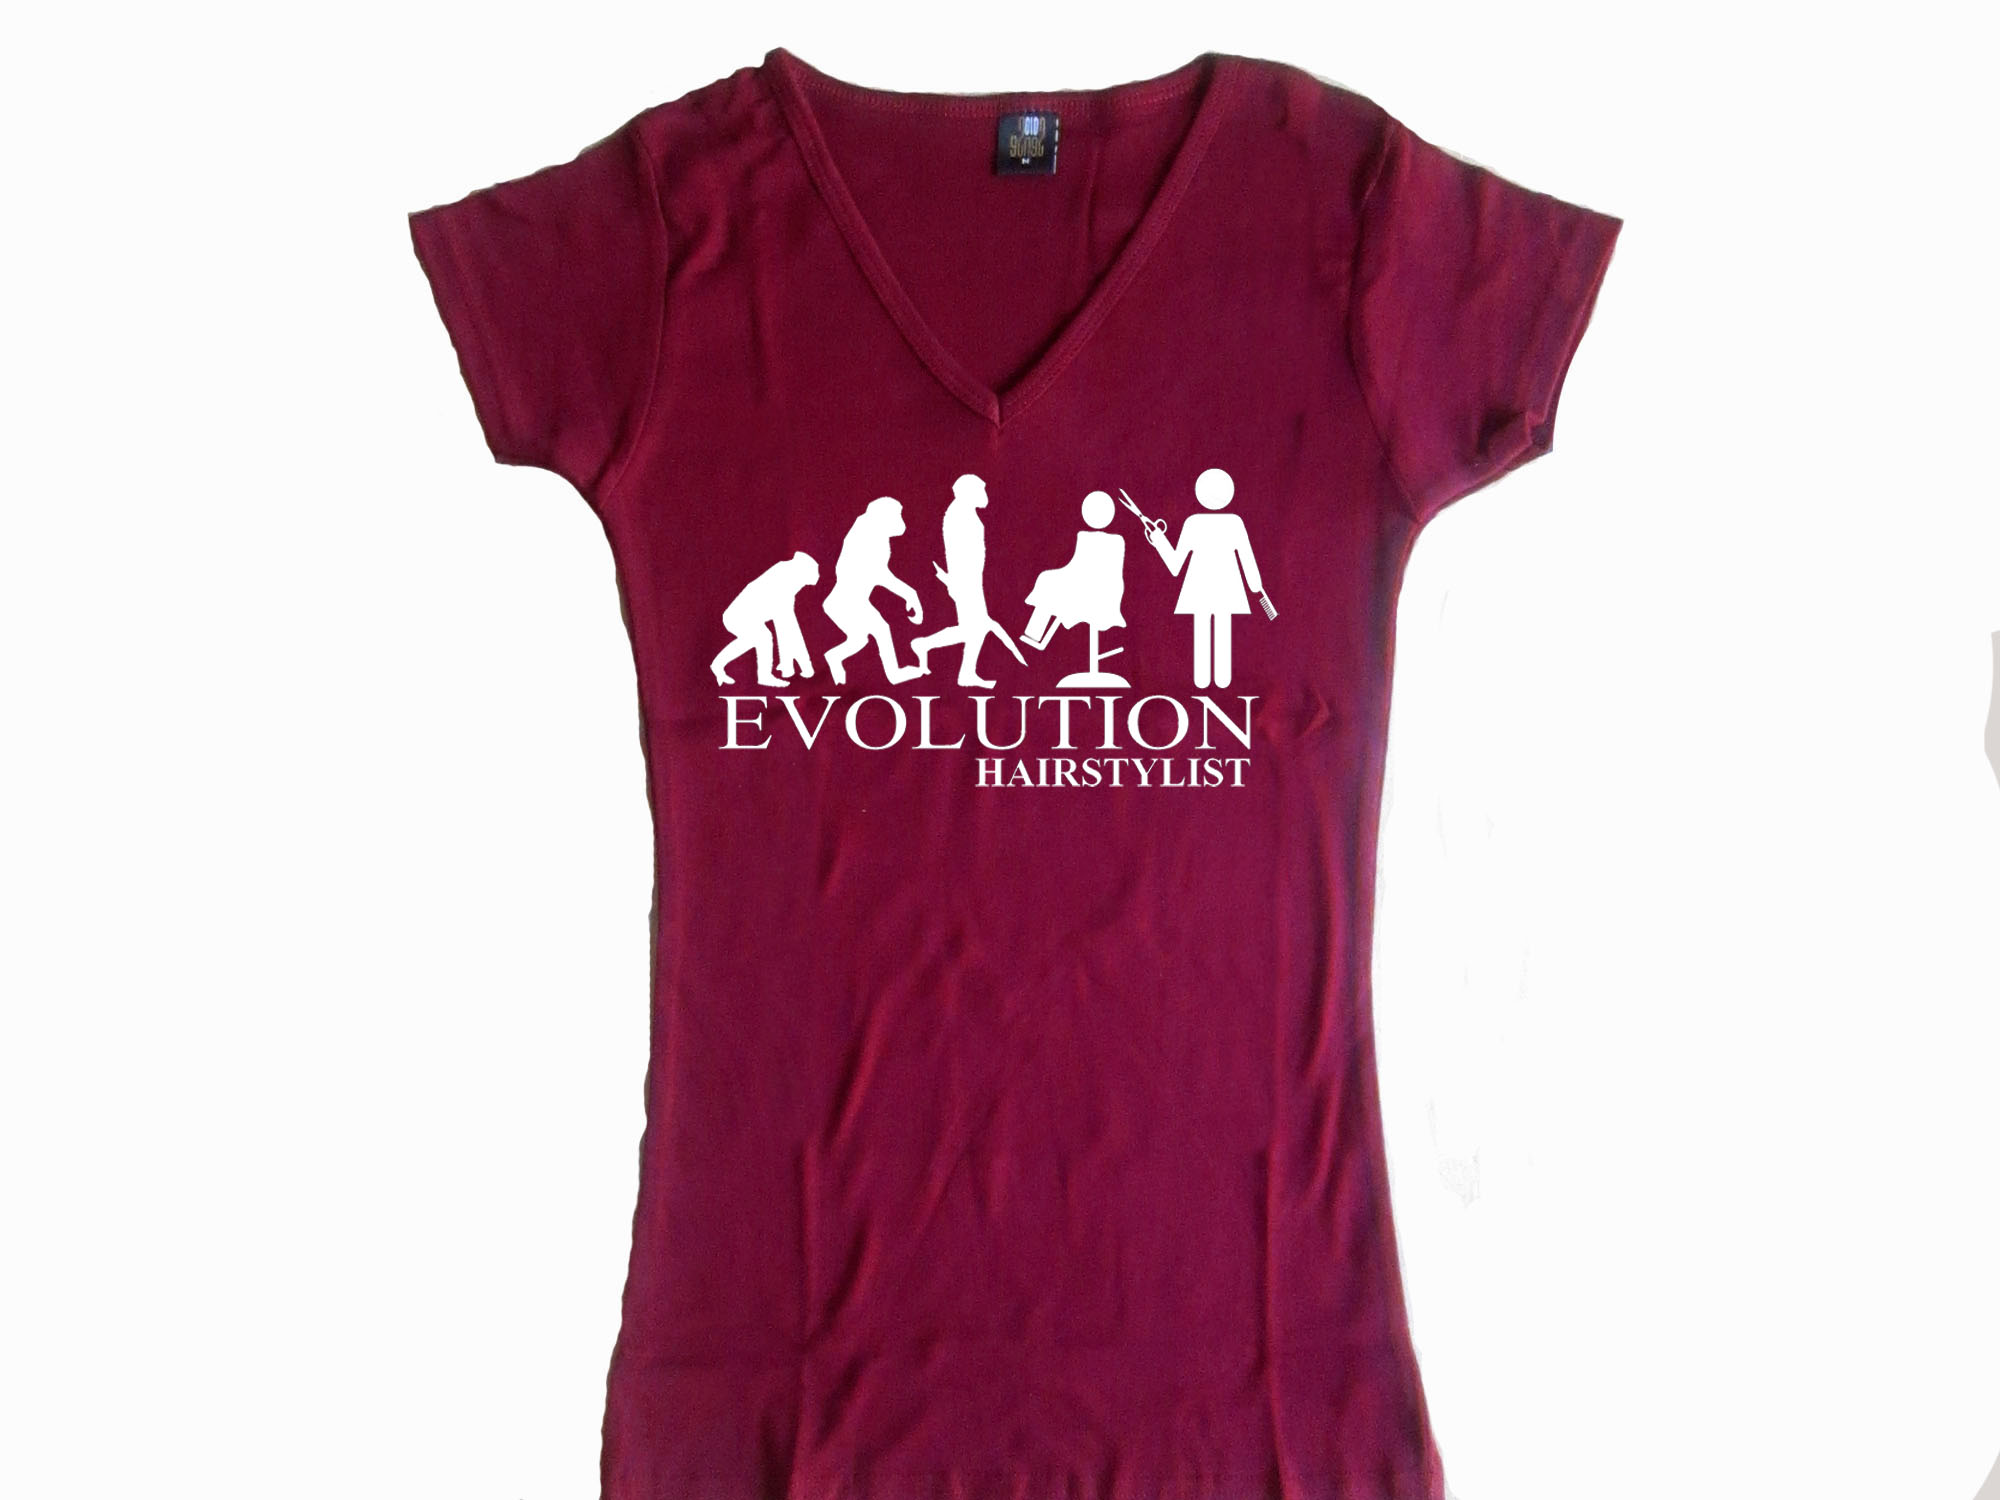 Hairstylist evolution female funny bordeaux t-shirt